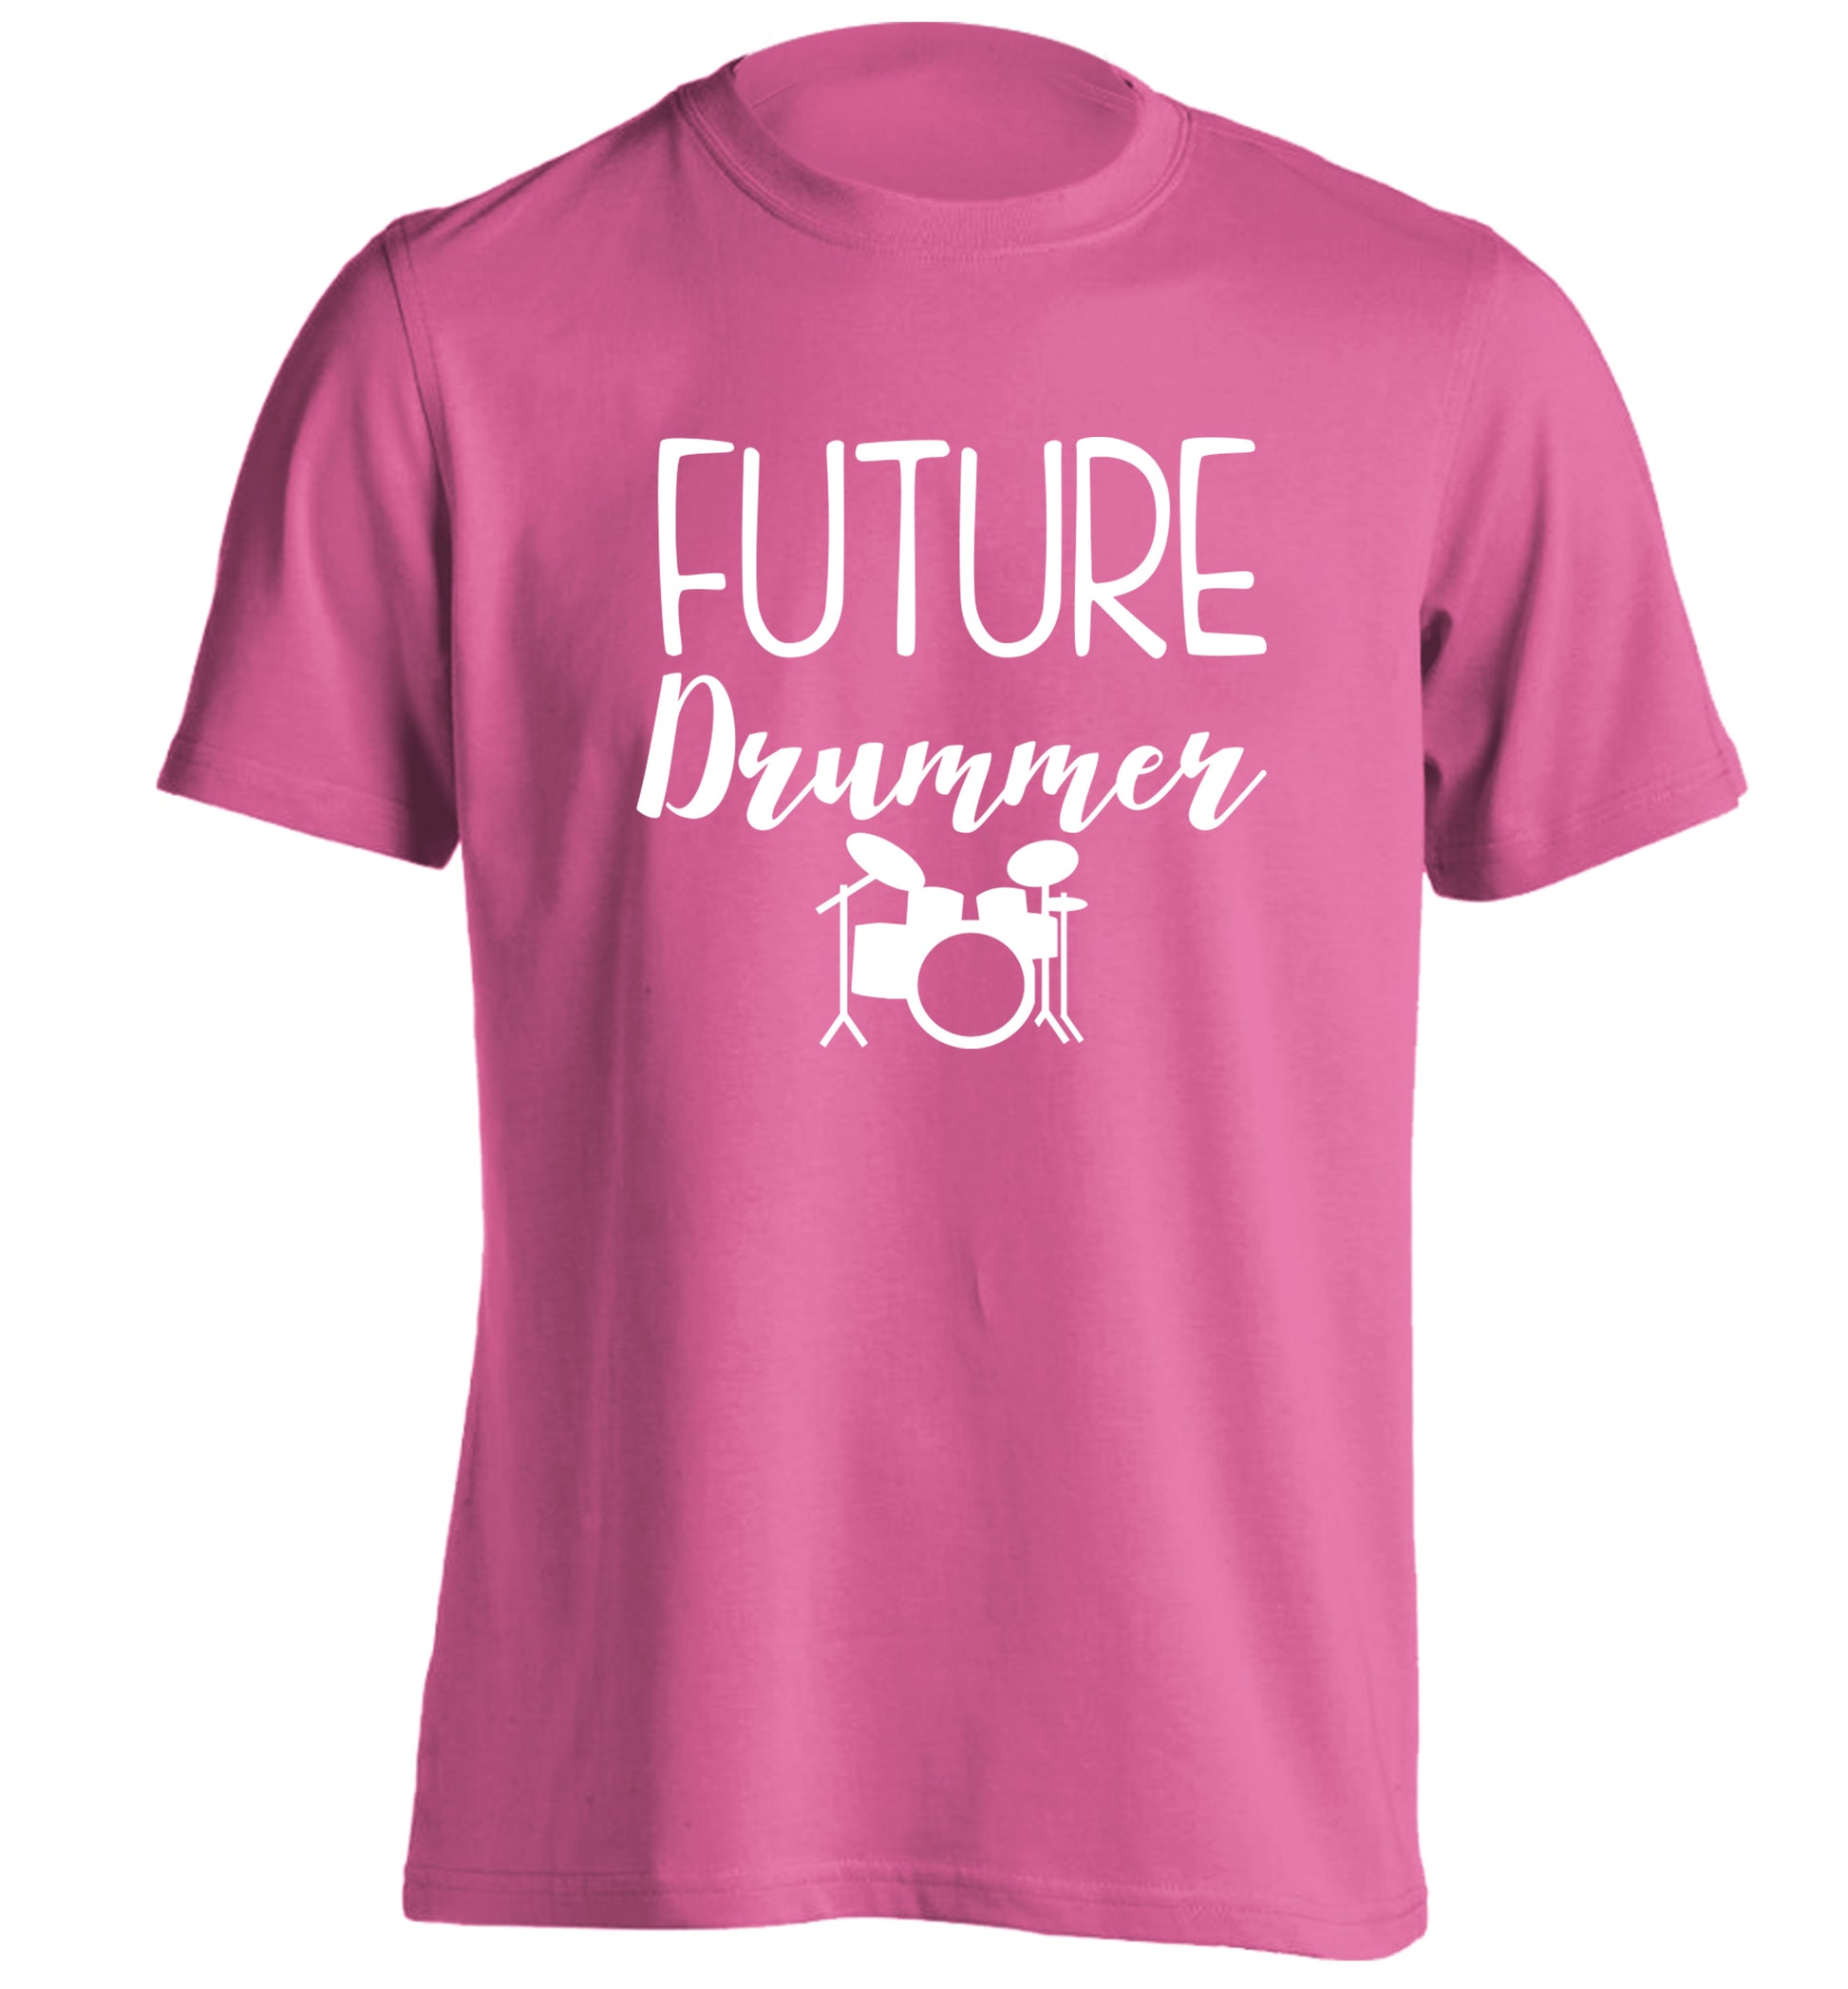 Future drummer adults unisex pink Tshirt 2XL